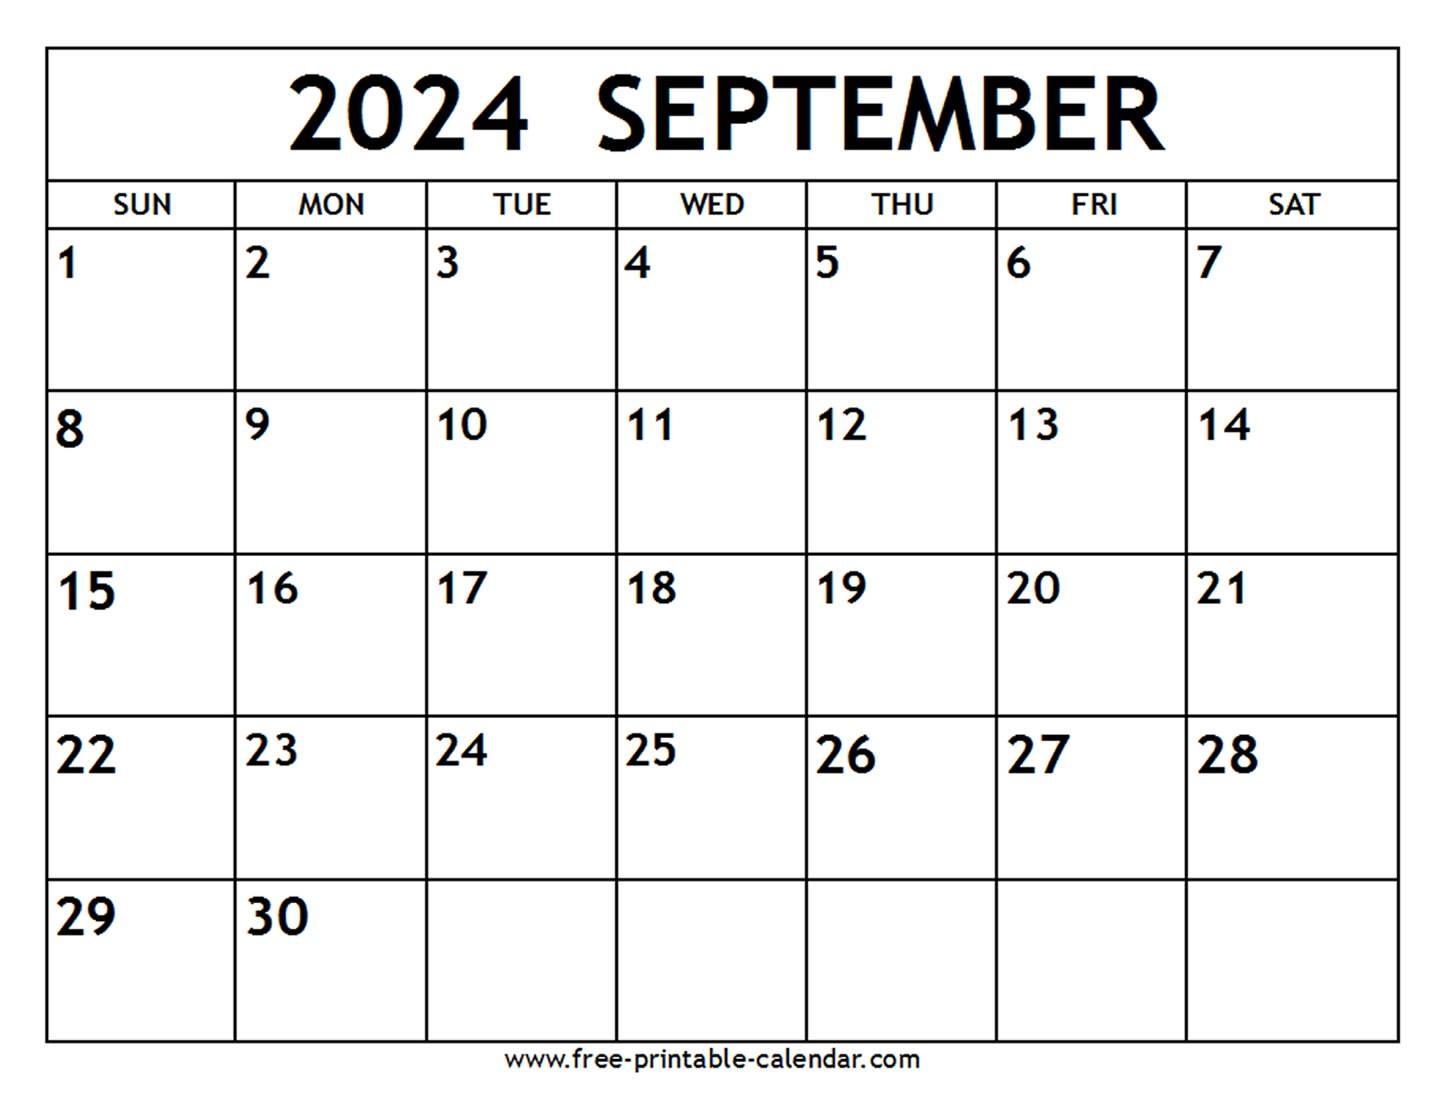 September 2024 Calendar - Free-Printable-Calendar with Free Printable Calendar August September 2024